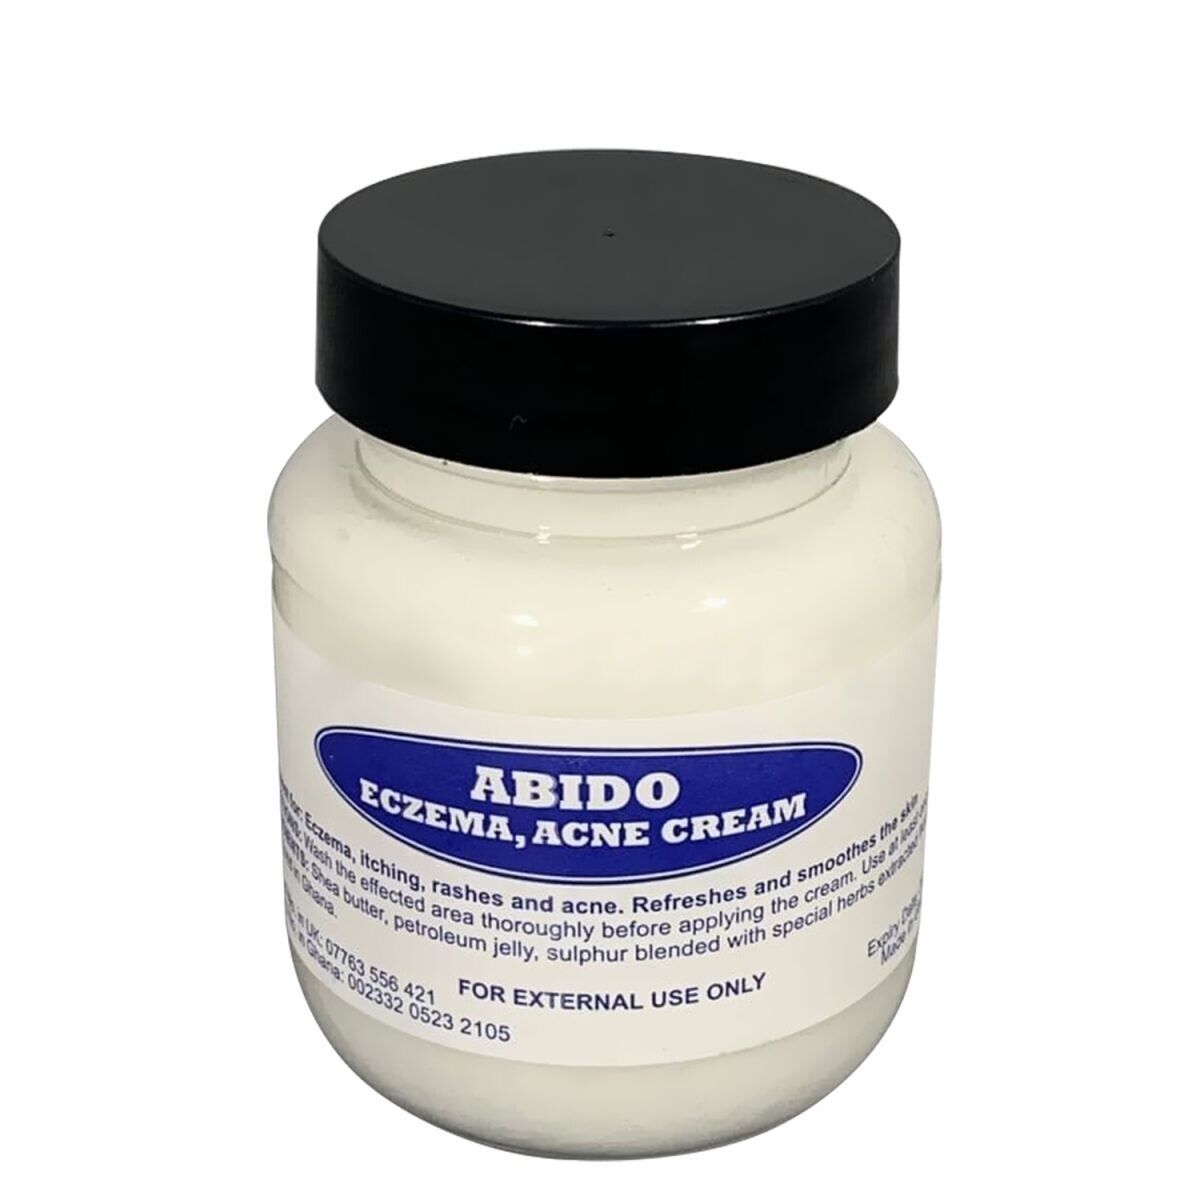 Abido Cream (pck of 6)